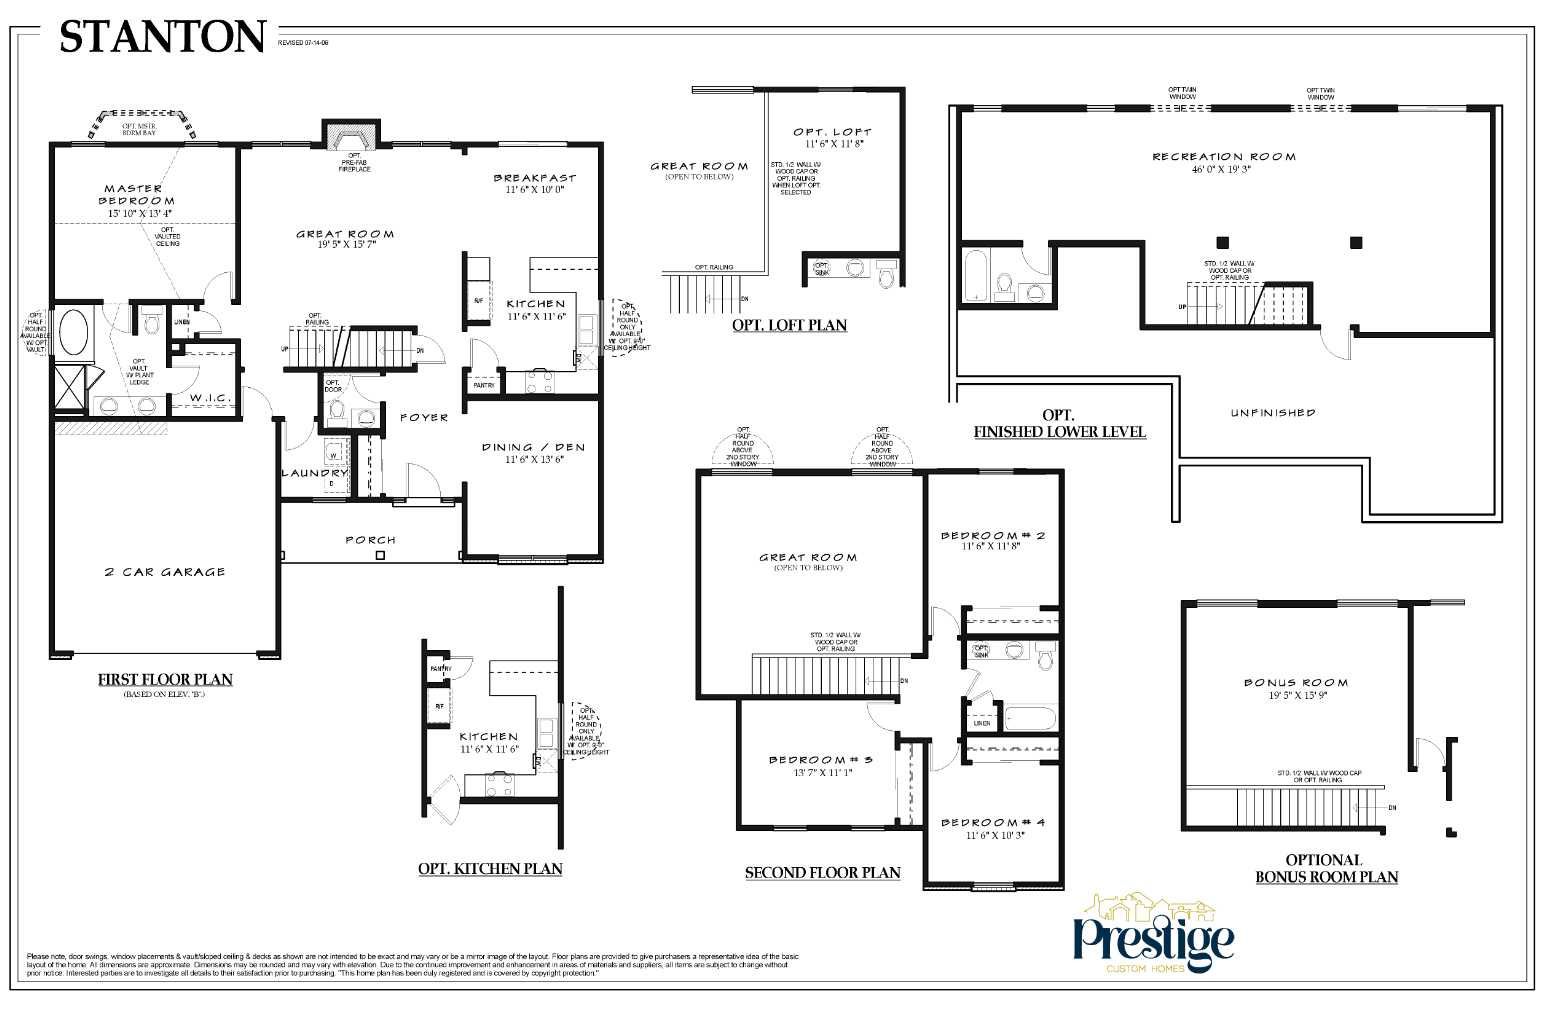 stanton-floor-plan-prestige-custom-homes